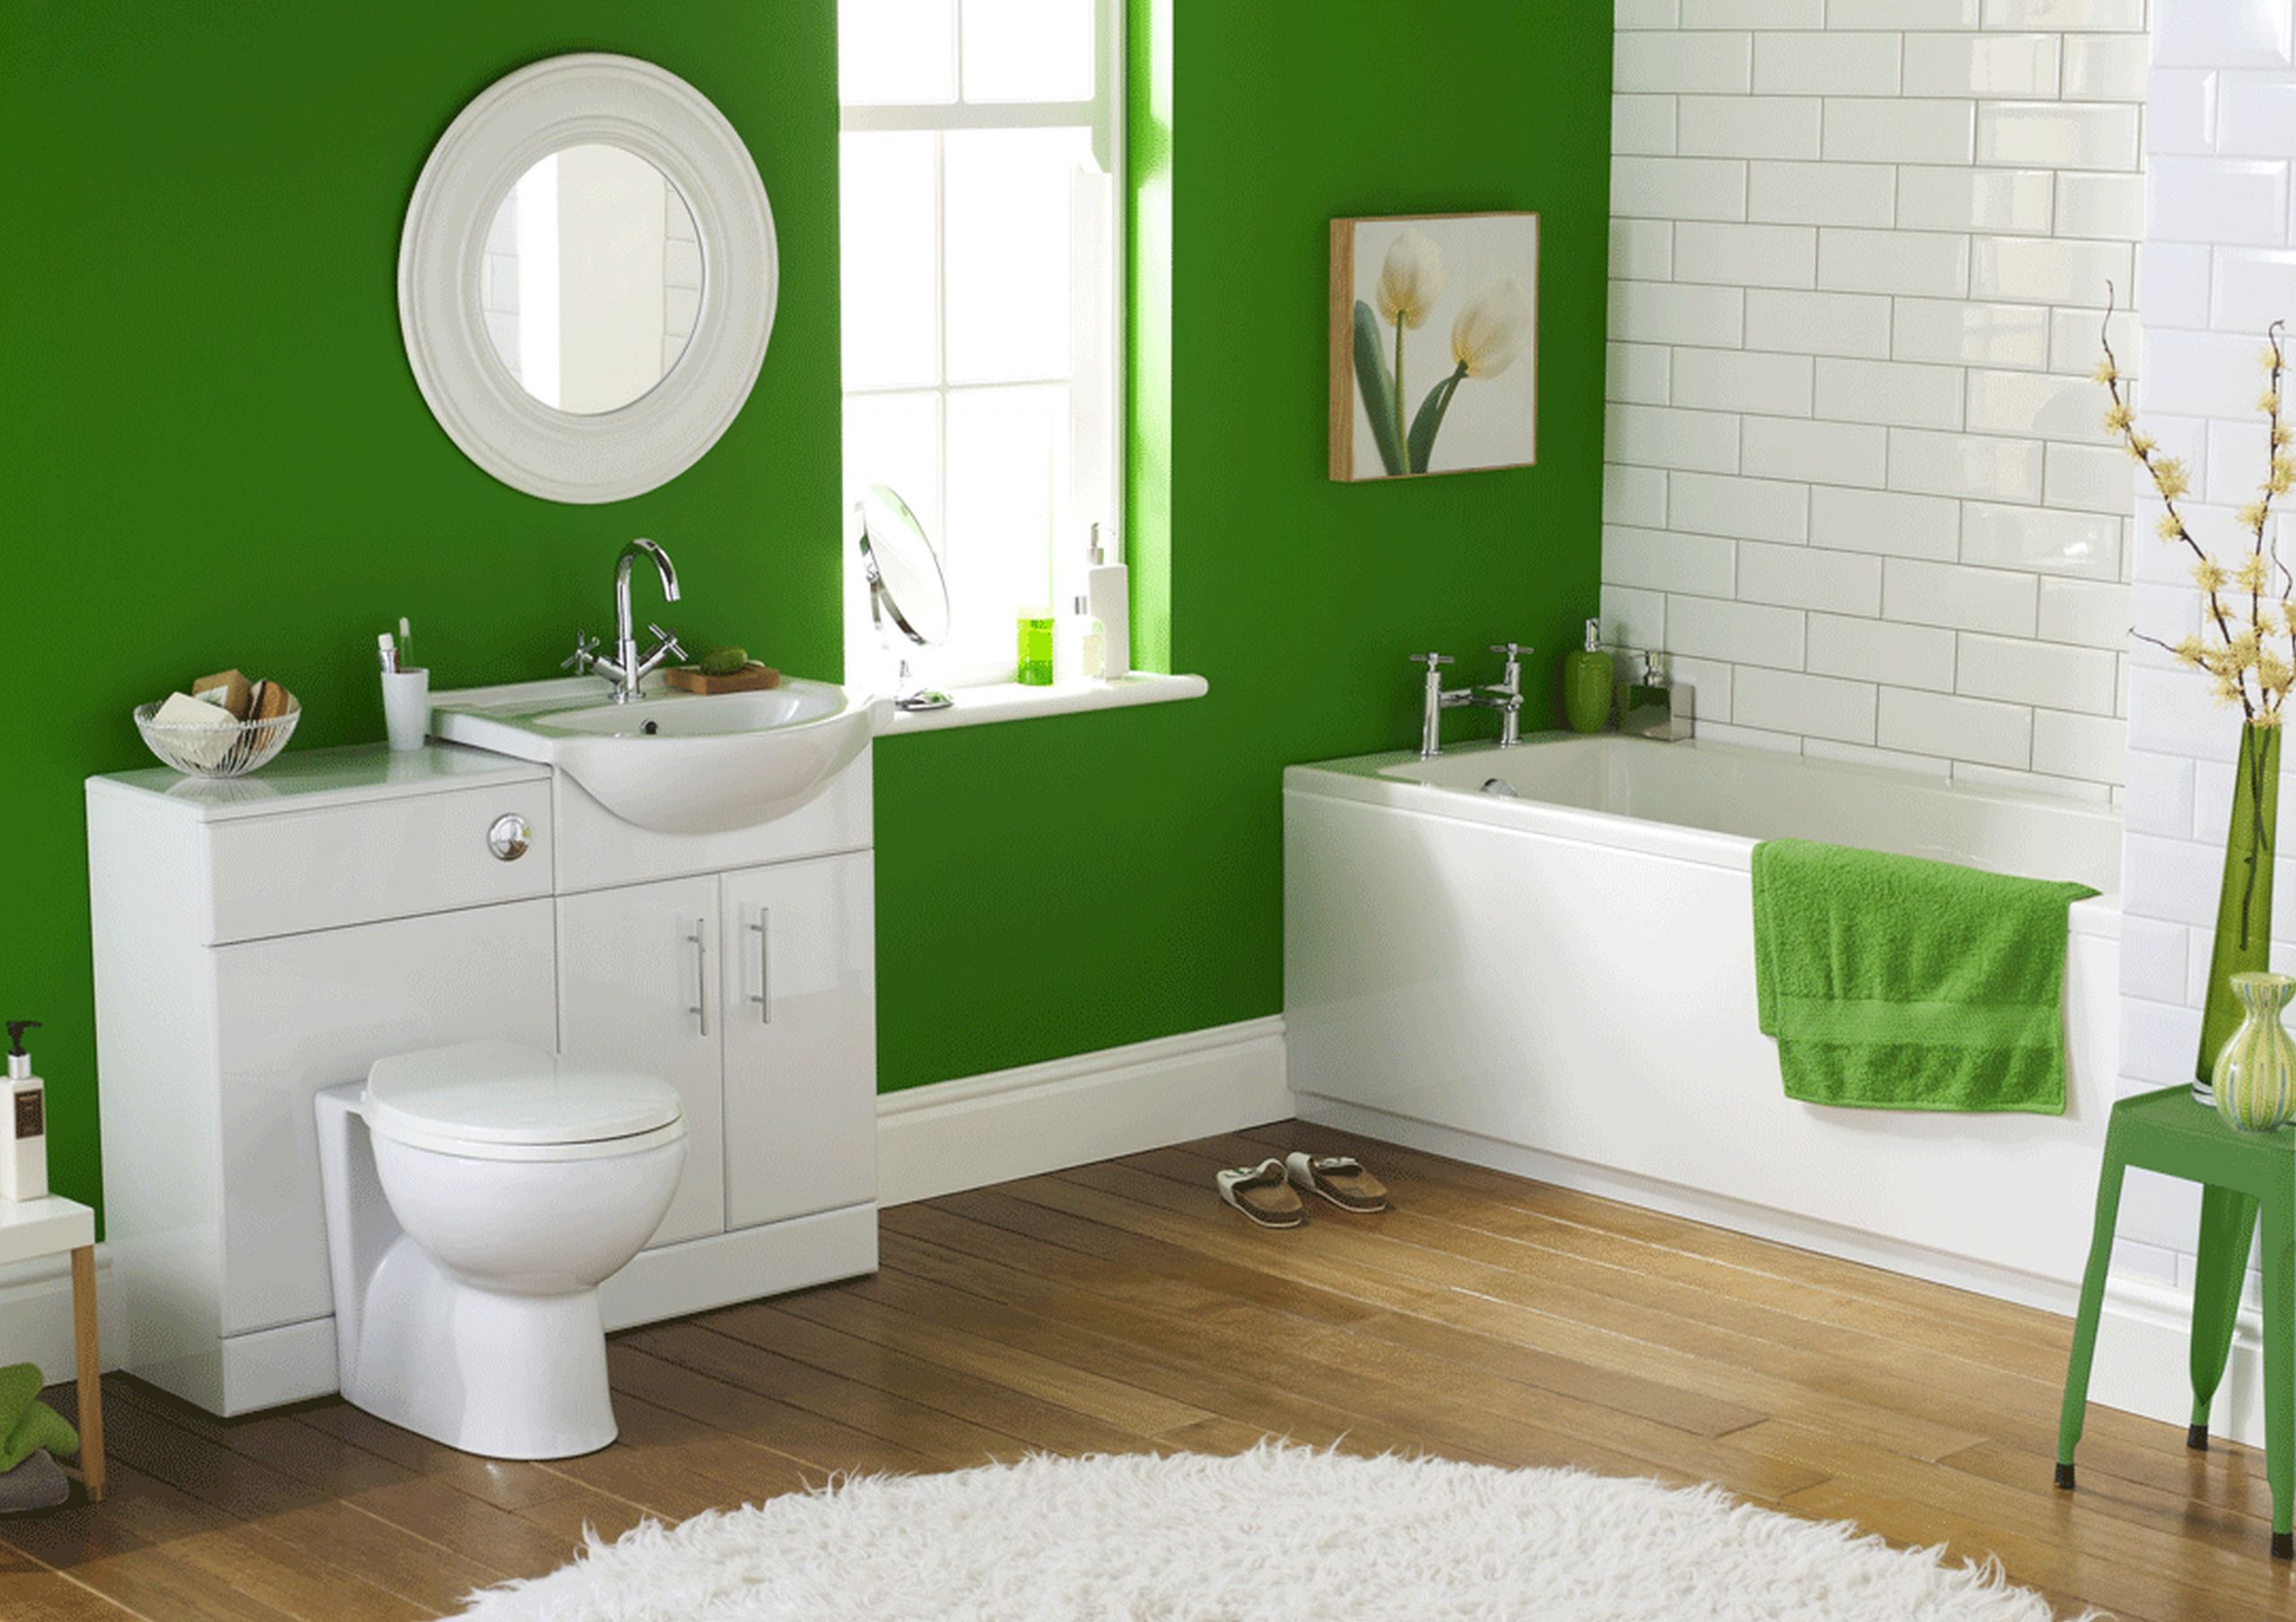 Bathroom Wall Paint
 Bathroom Décor Ideas From Tub To Colors MidCityEast